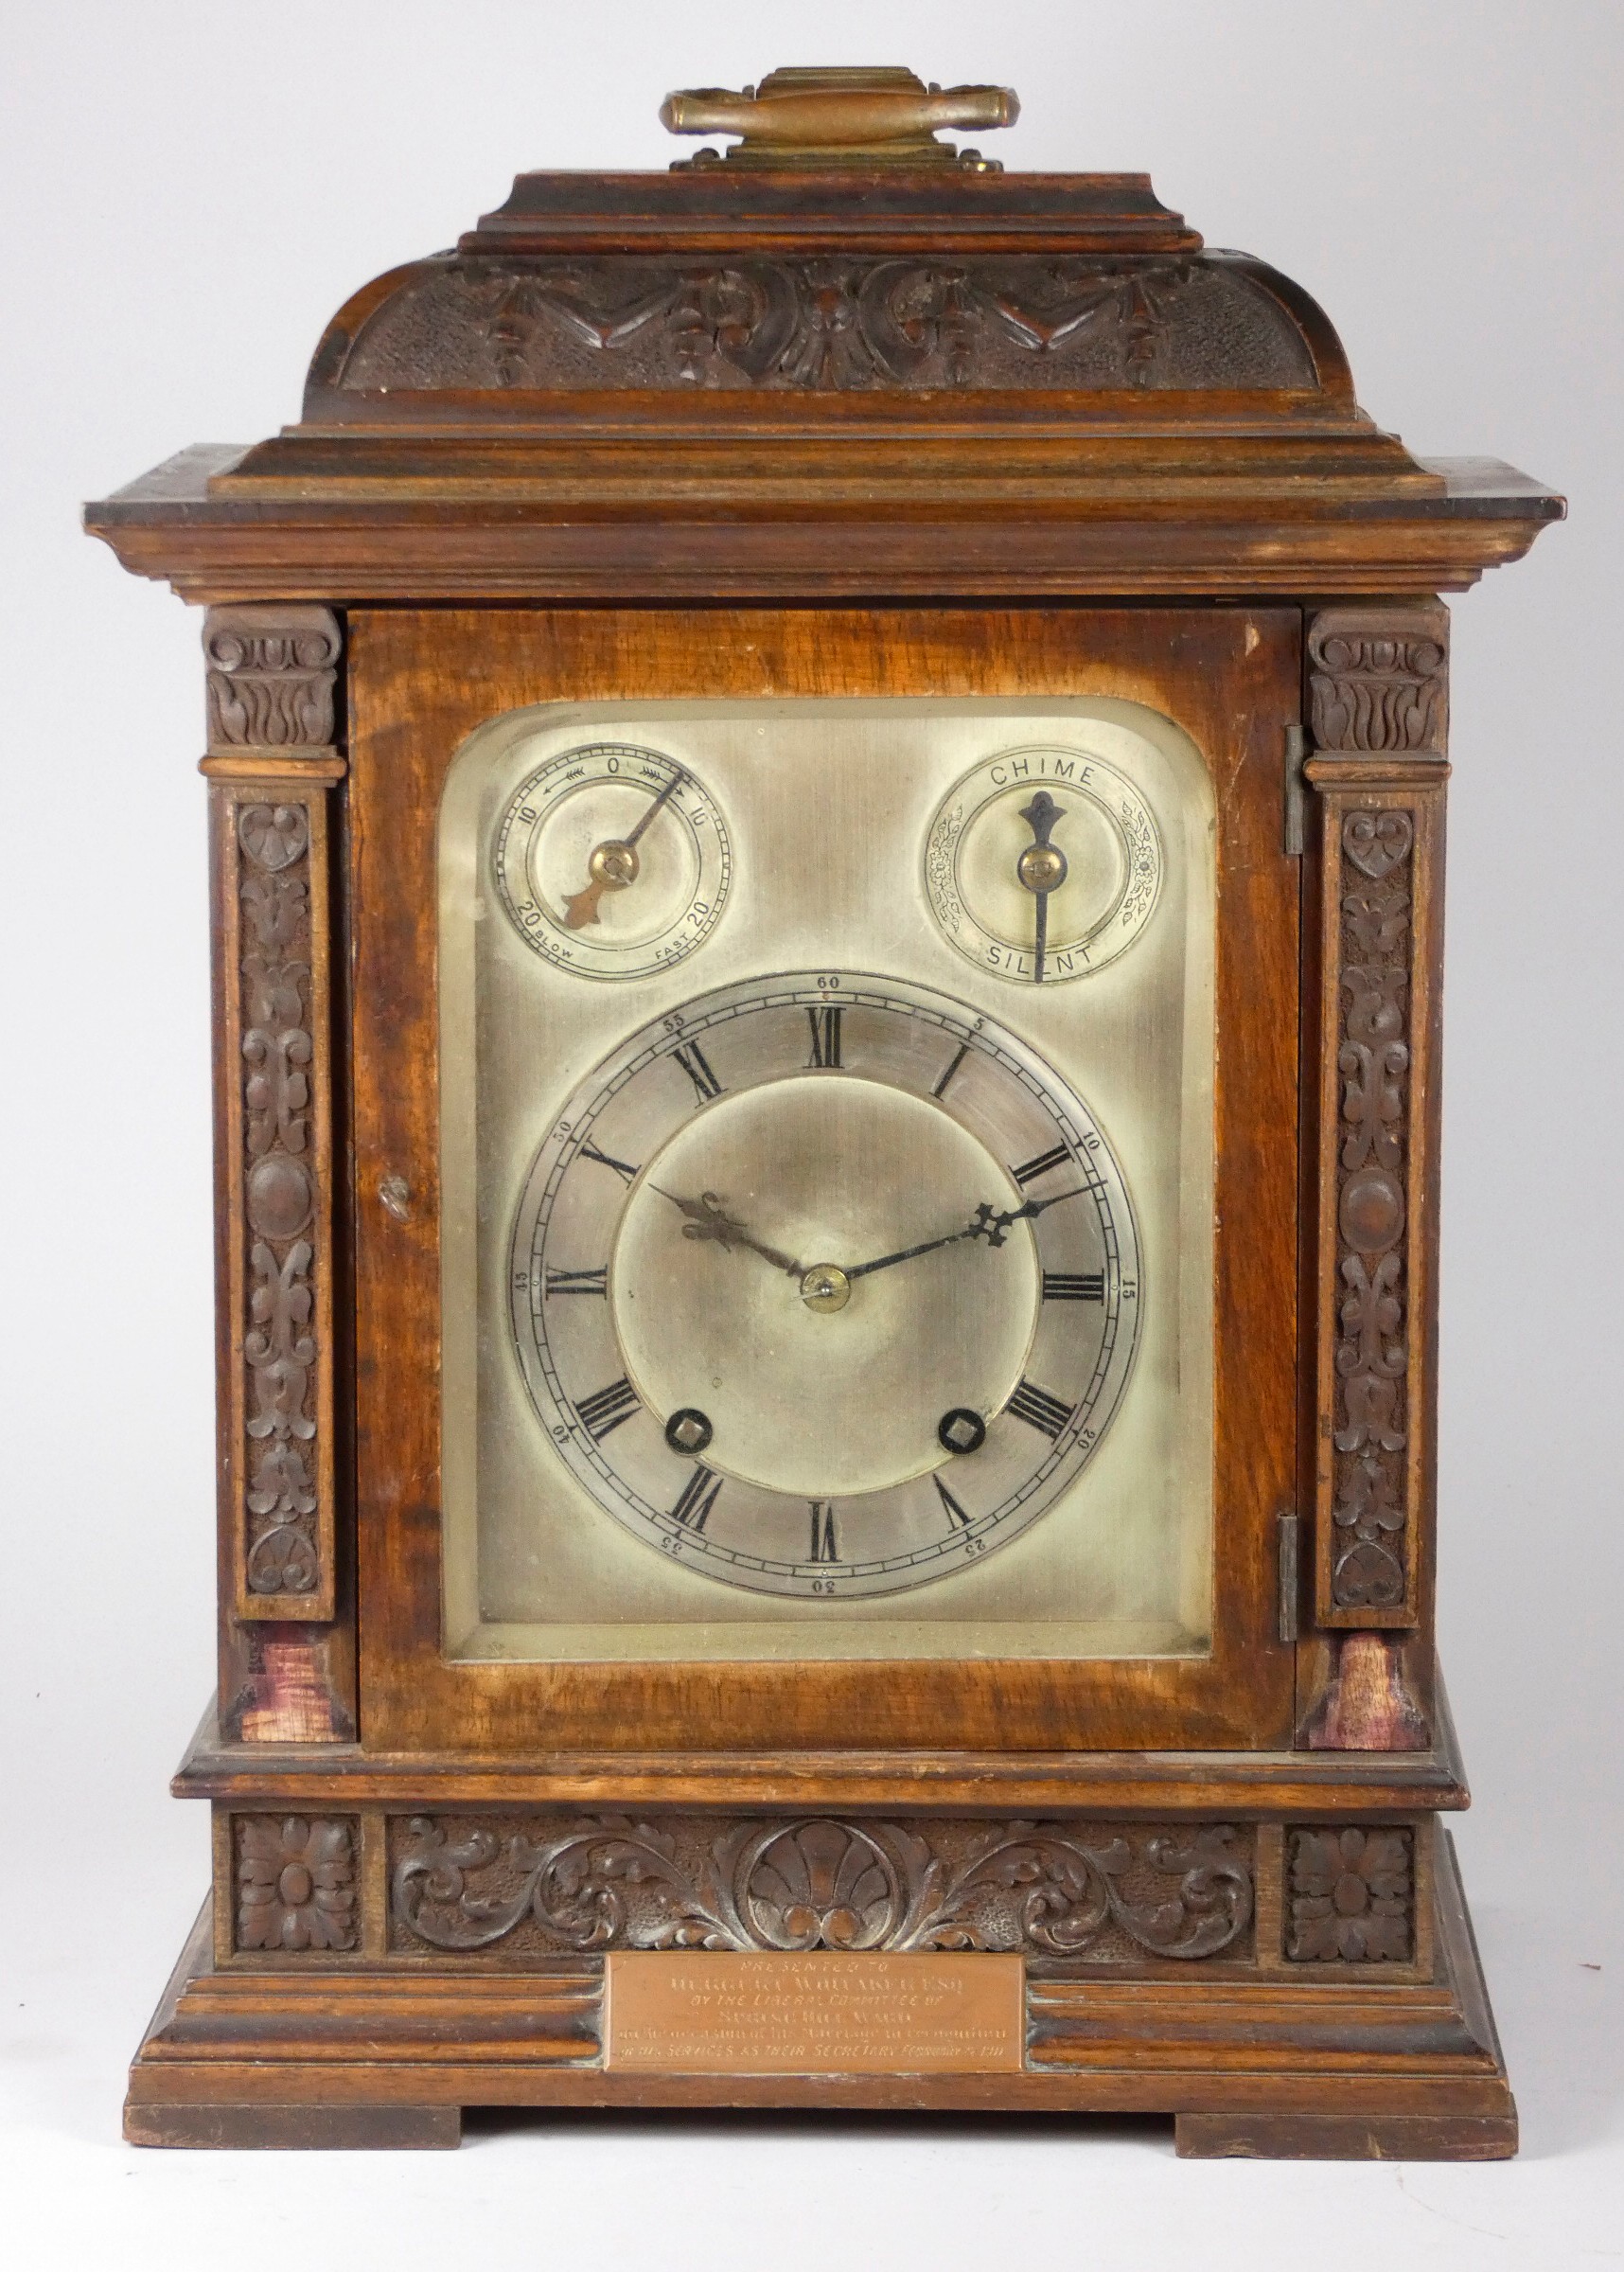 A late 19th century Winterhalder & Hofmeier mahogany striking bracket clock, the brass dial with